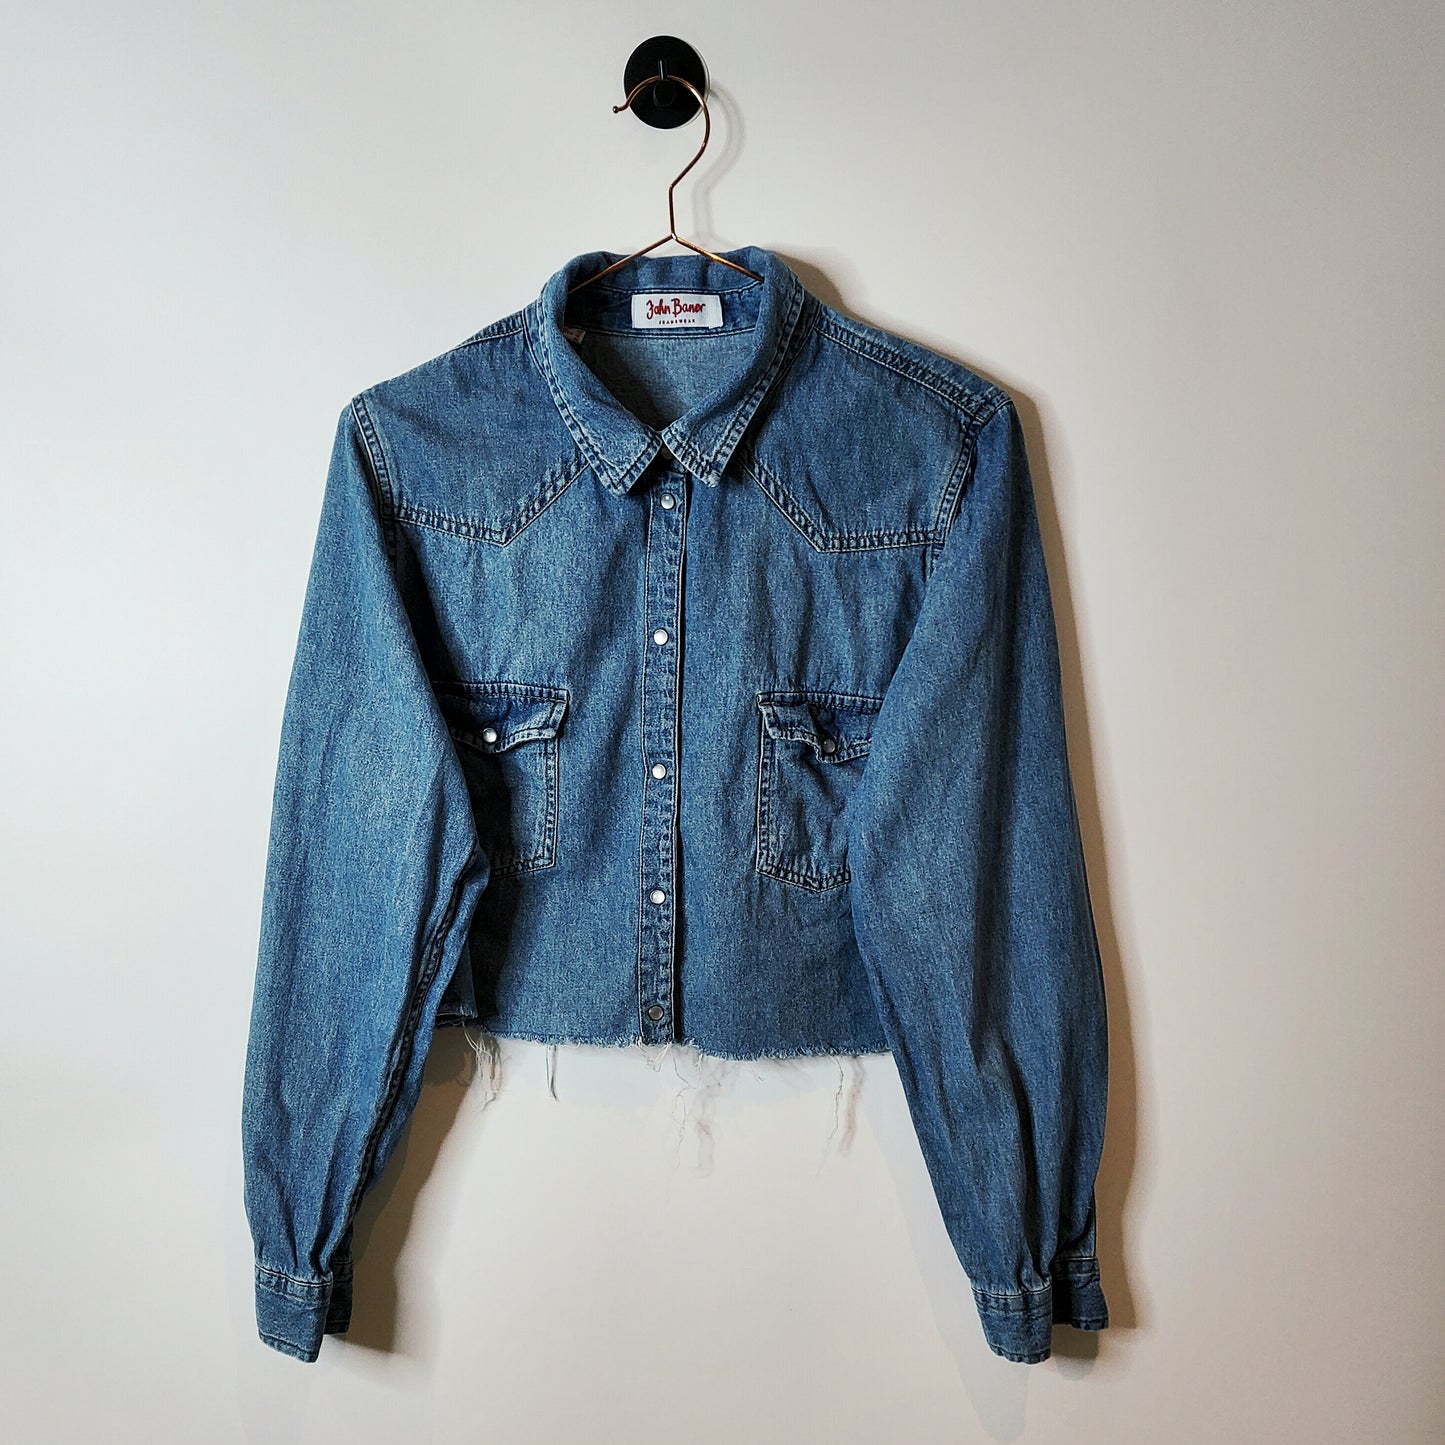 Blue reworked denim cropped jacket shirt - size 10-12